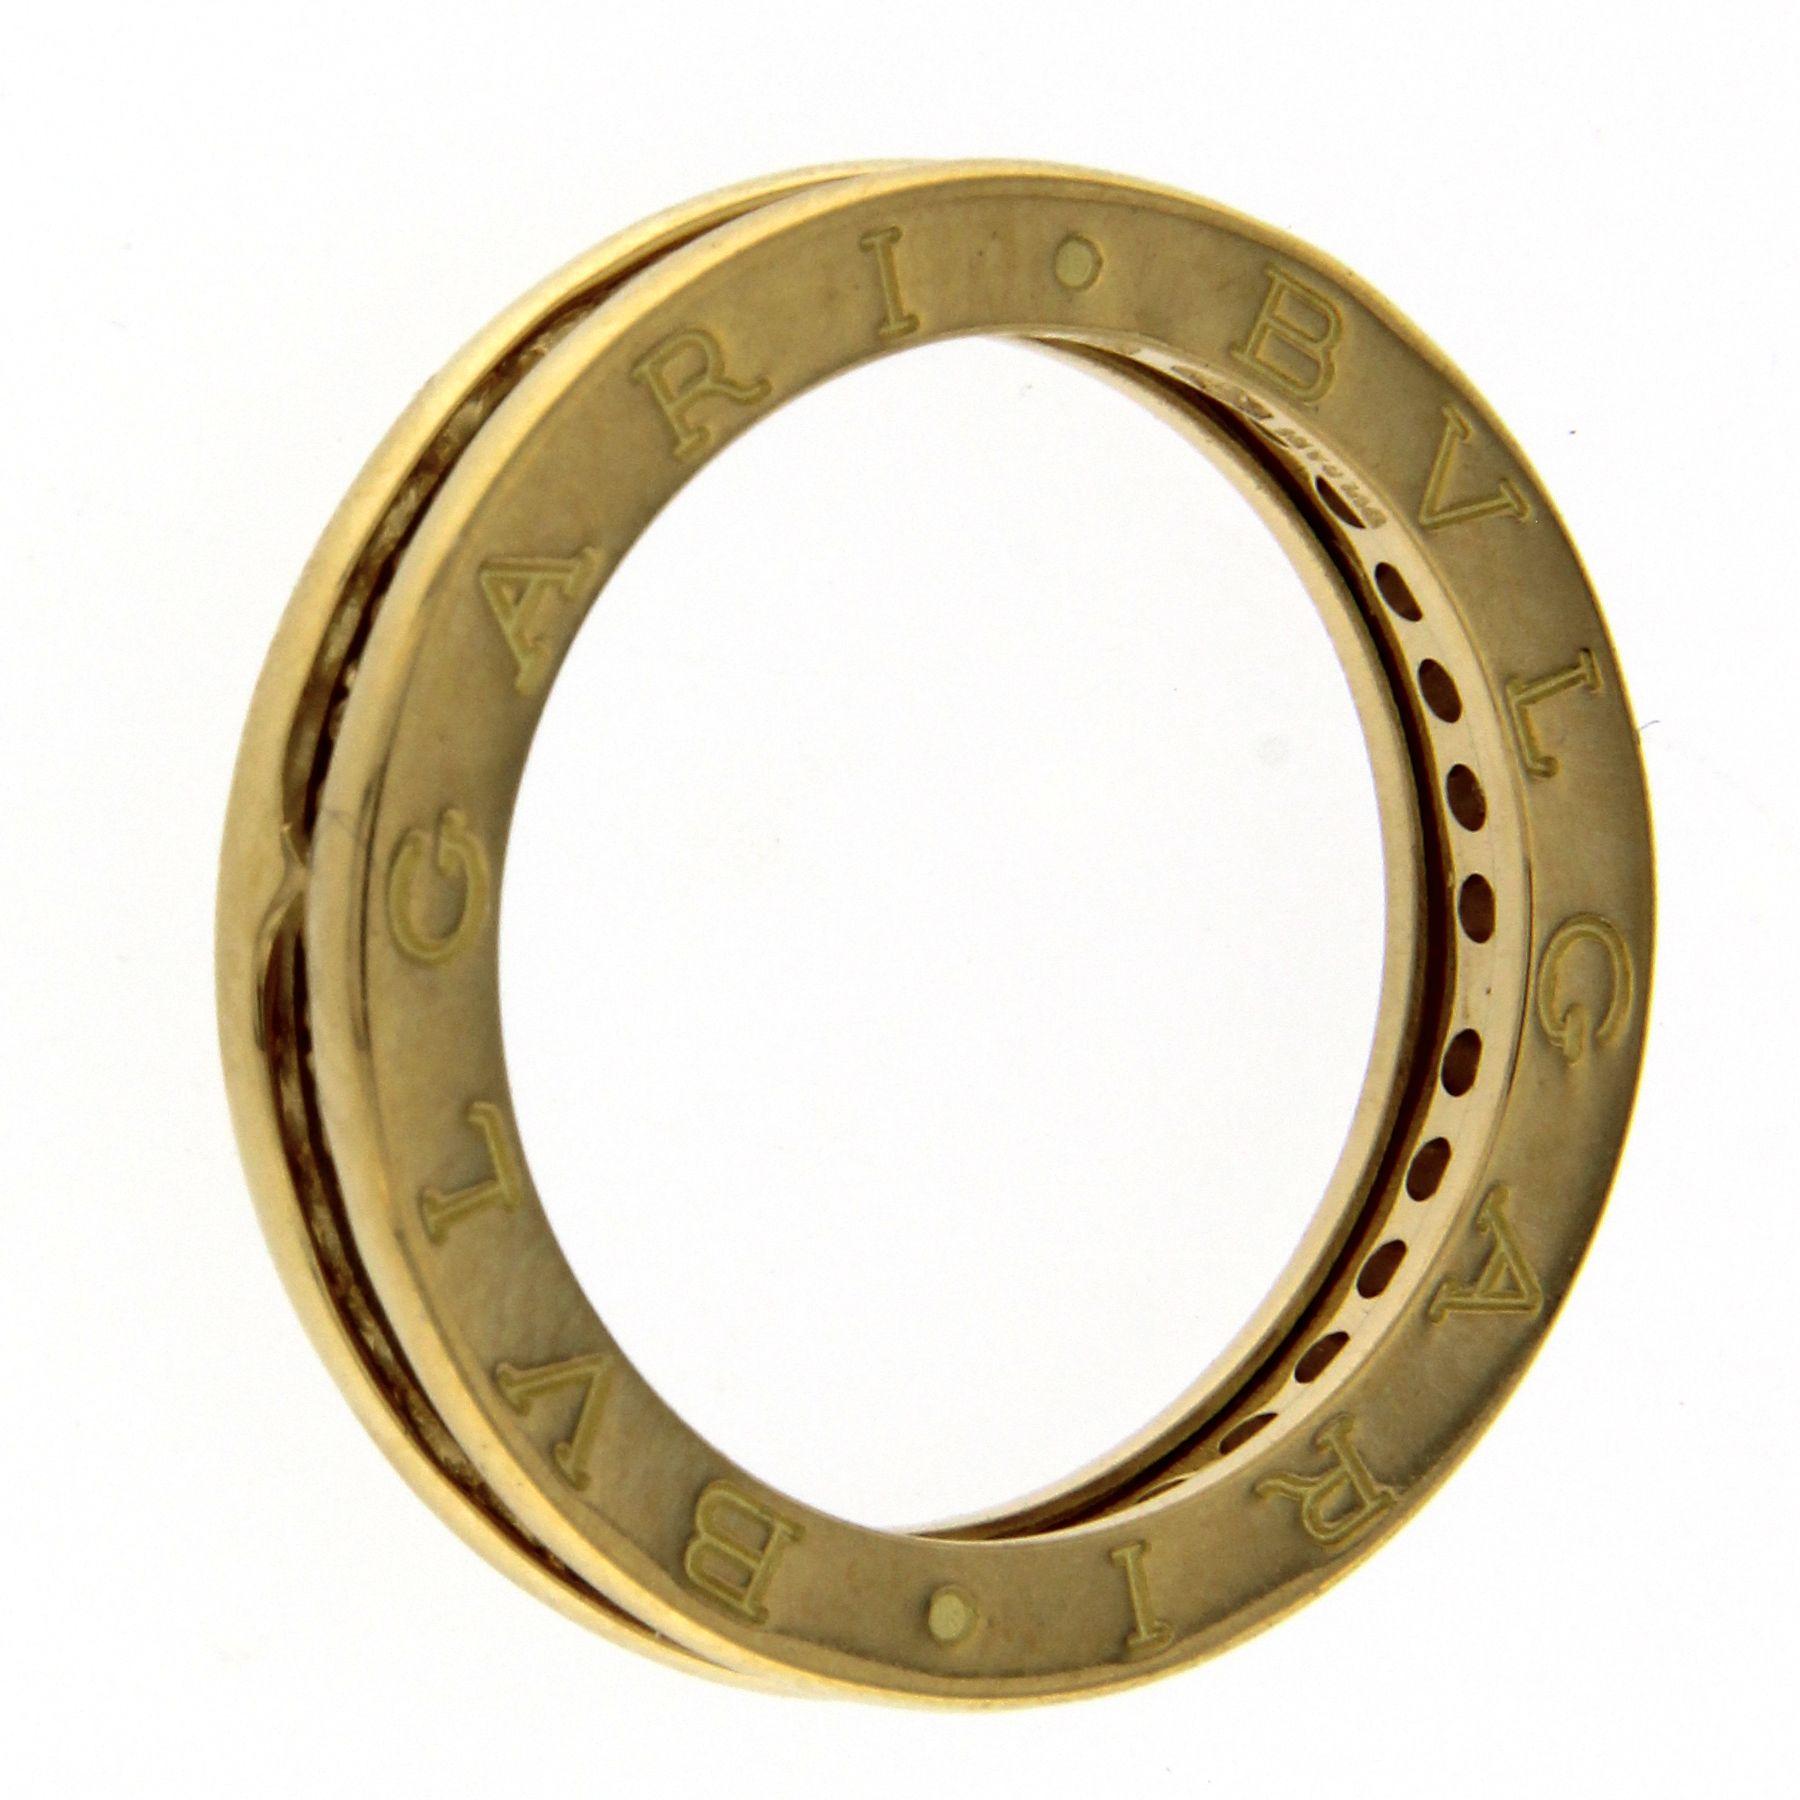 BZERO1 ring 18kt yellow gold       size 55        3 Band aprox ct .50